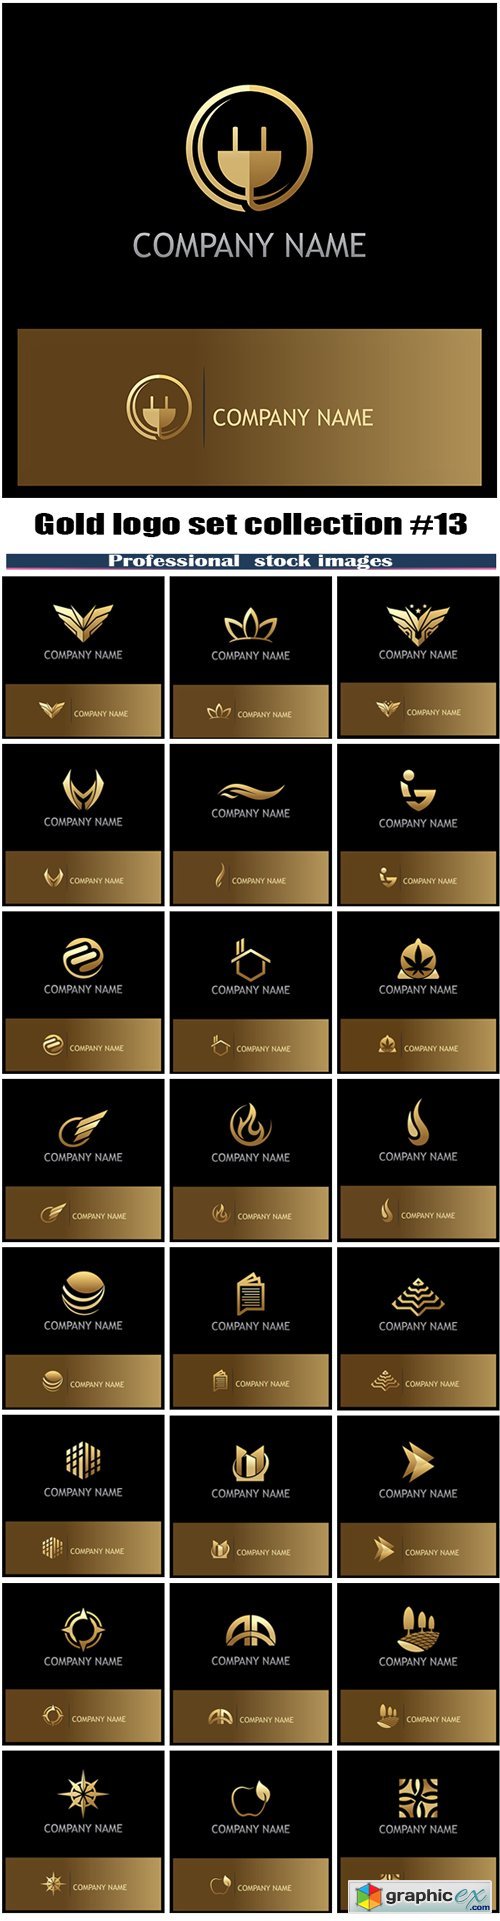 Gold logo set collection #13